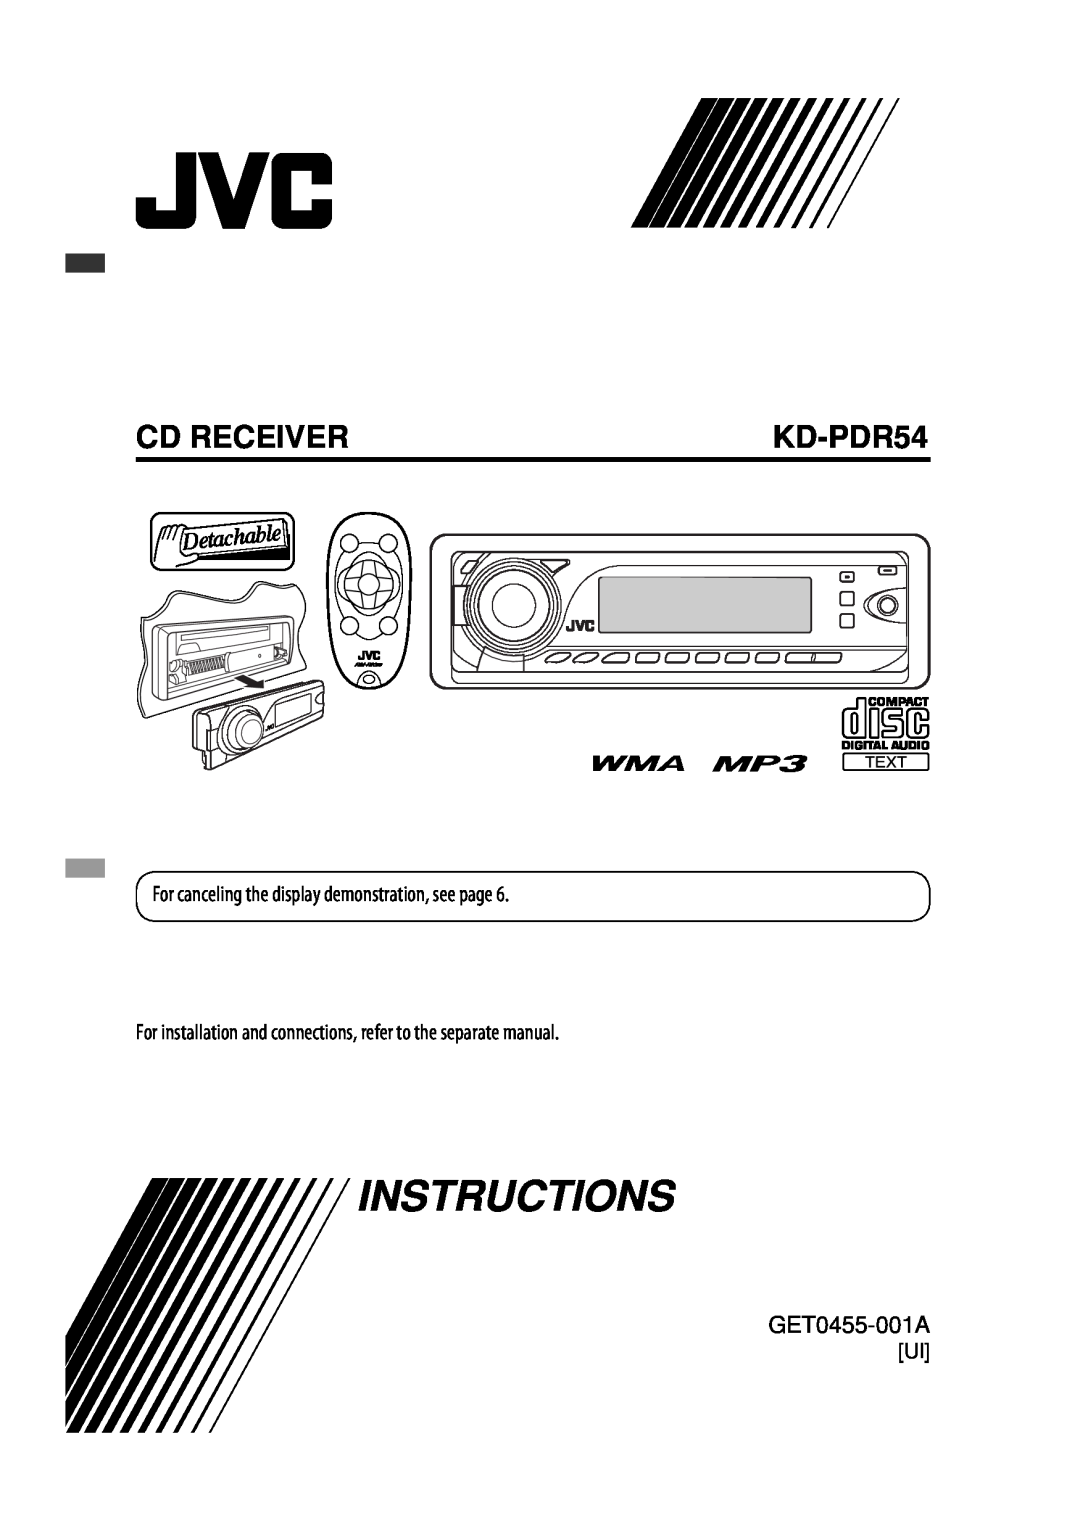 JVC GET0425-001A manual KD-PDR54, Instructions, Cd Receiver, GET0455-001A 